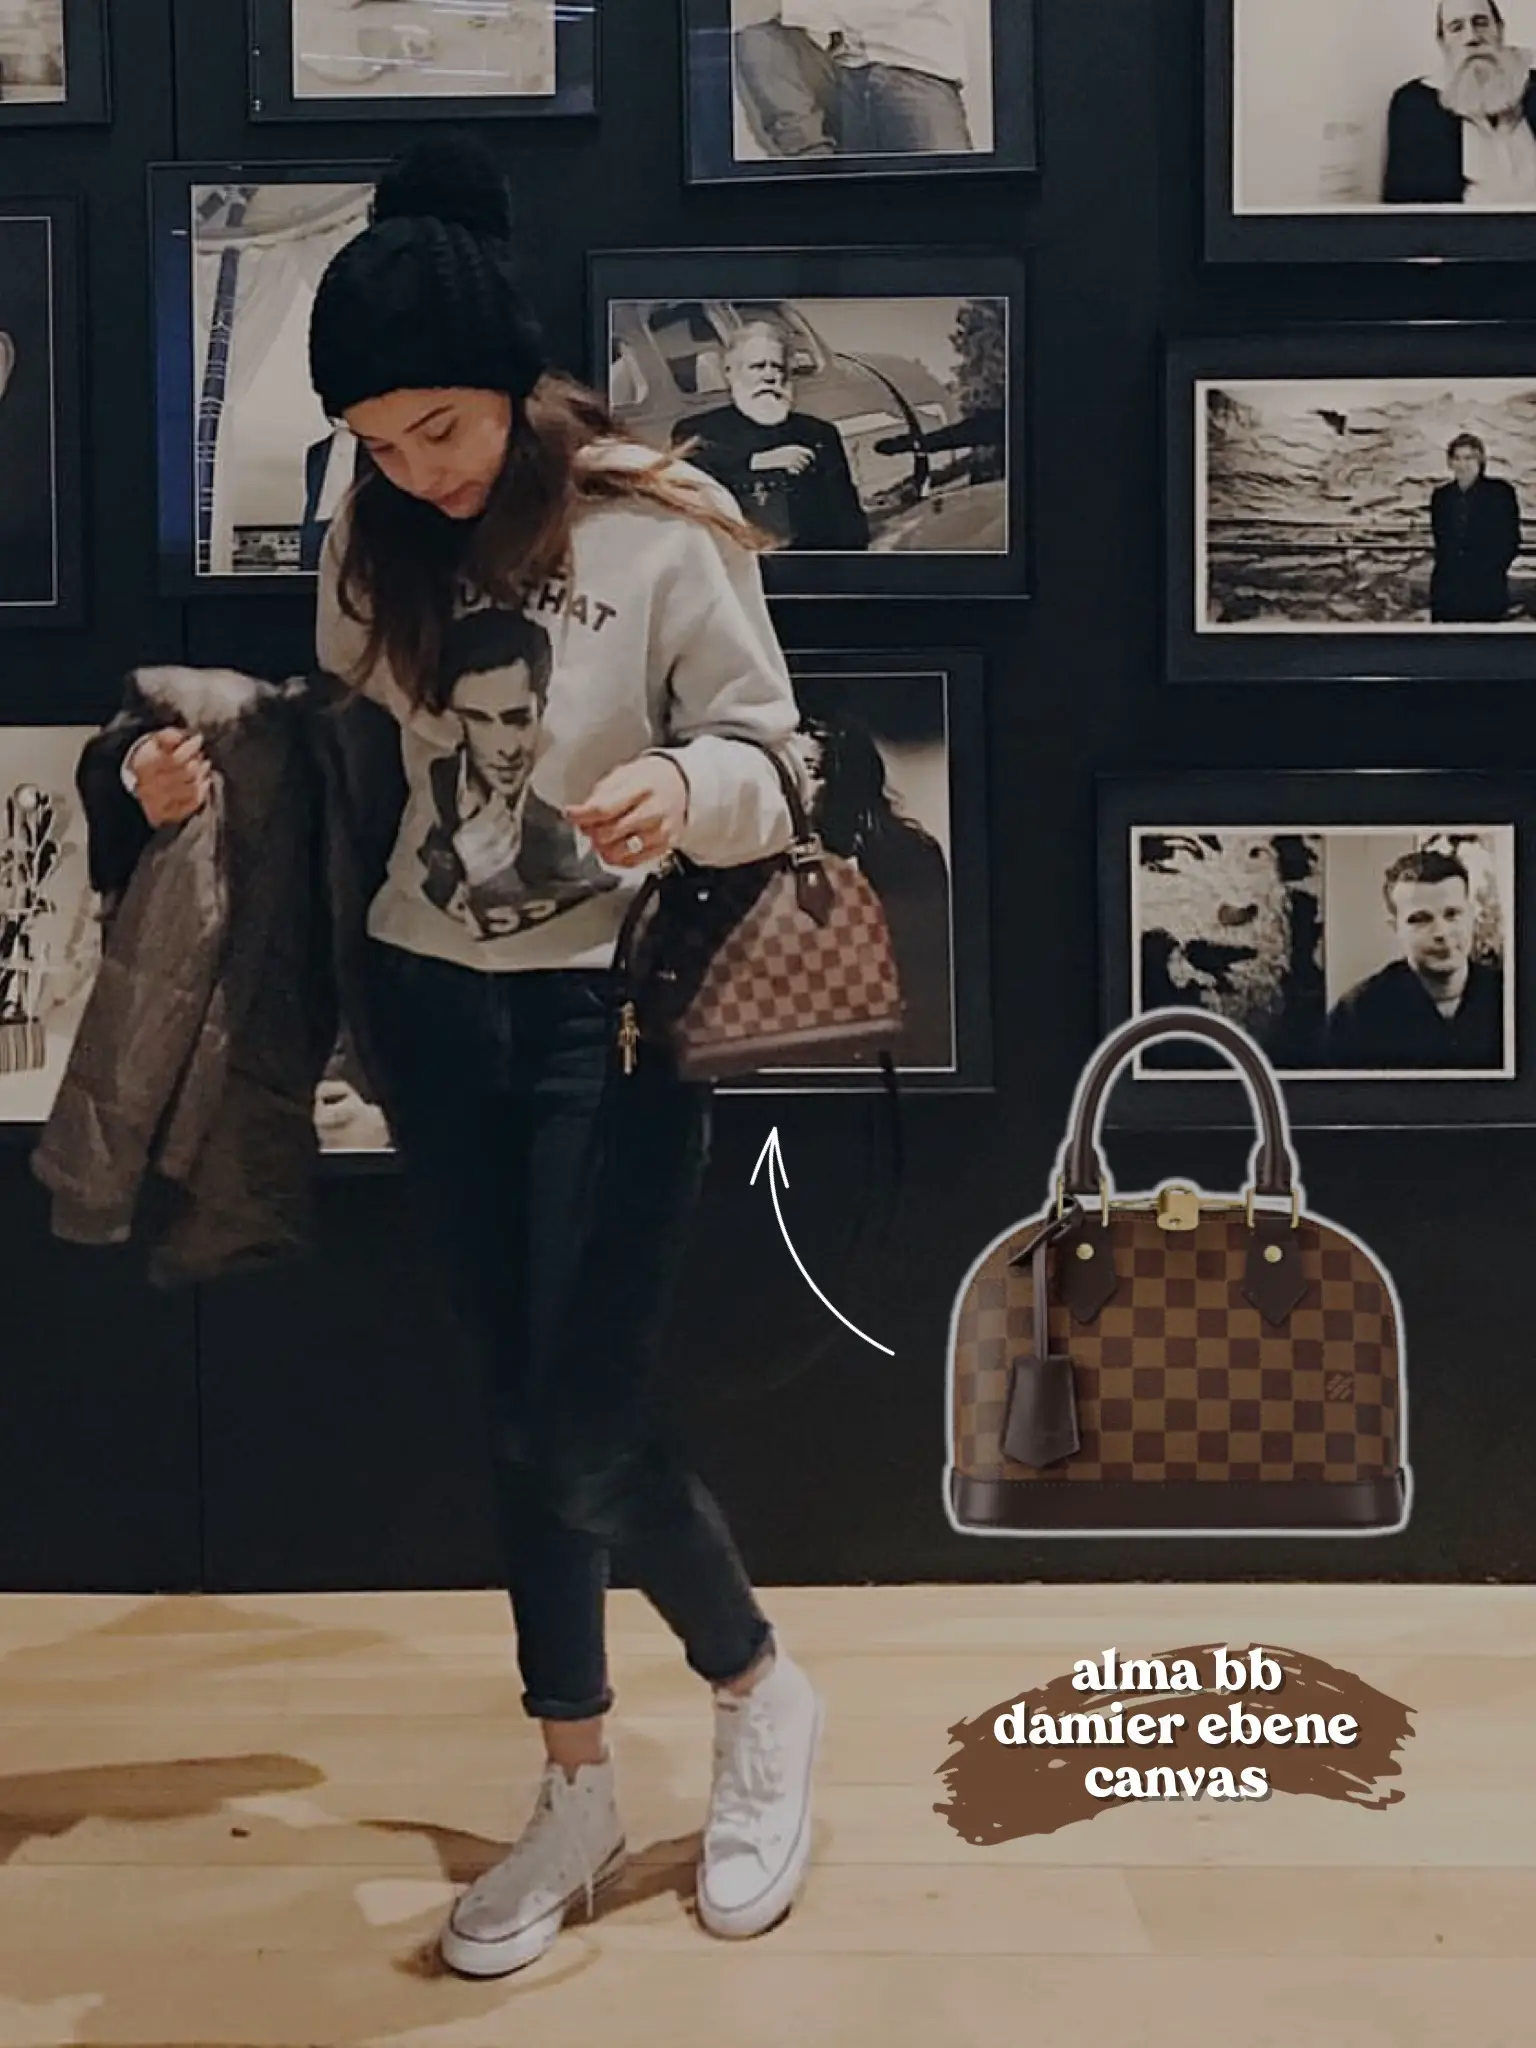 Which Louis Vuitton Handbag Should You Invest? 👜